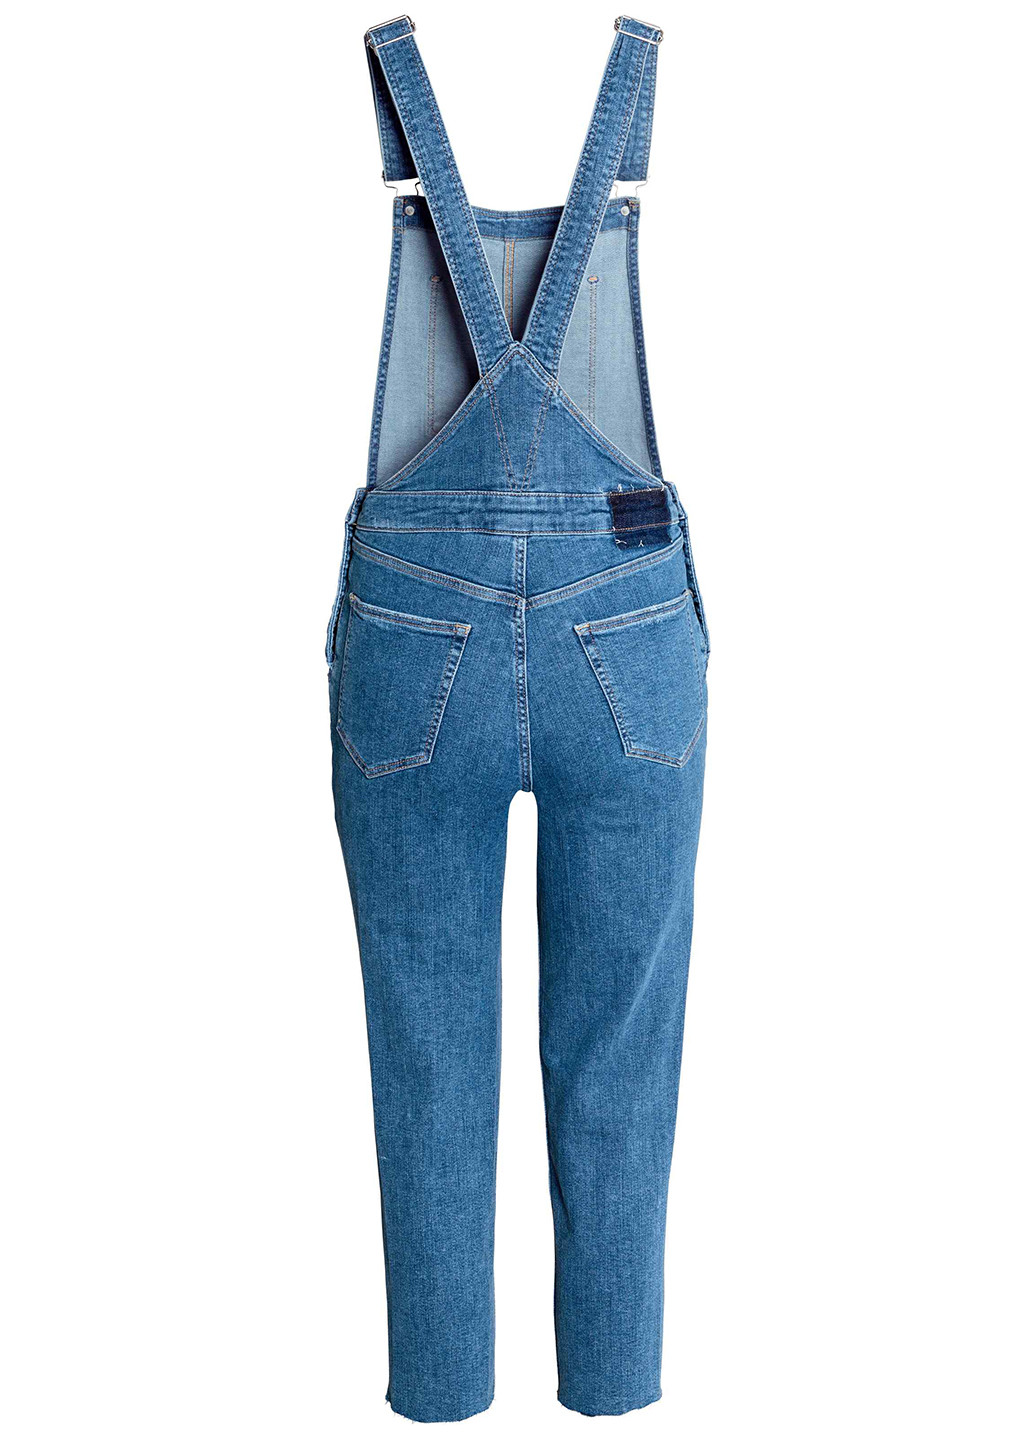 Комбинезон H&M комбинезон-брюки светло-синий денил